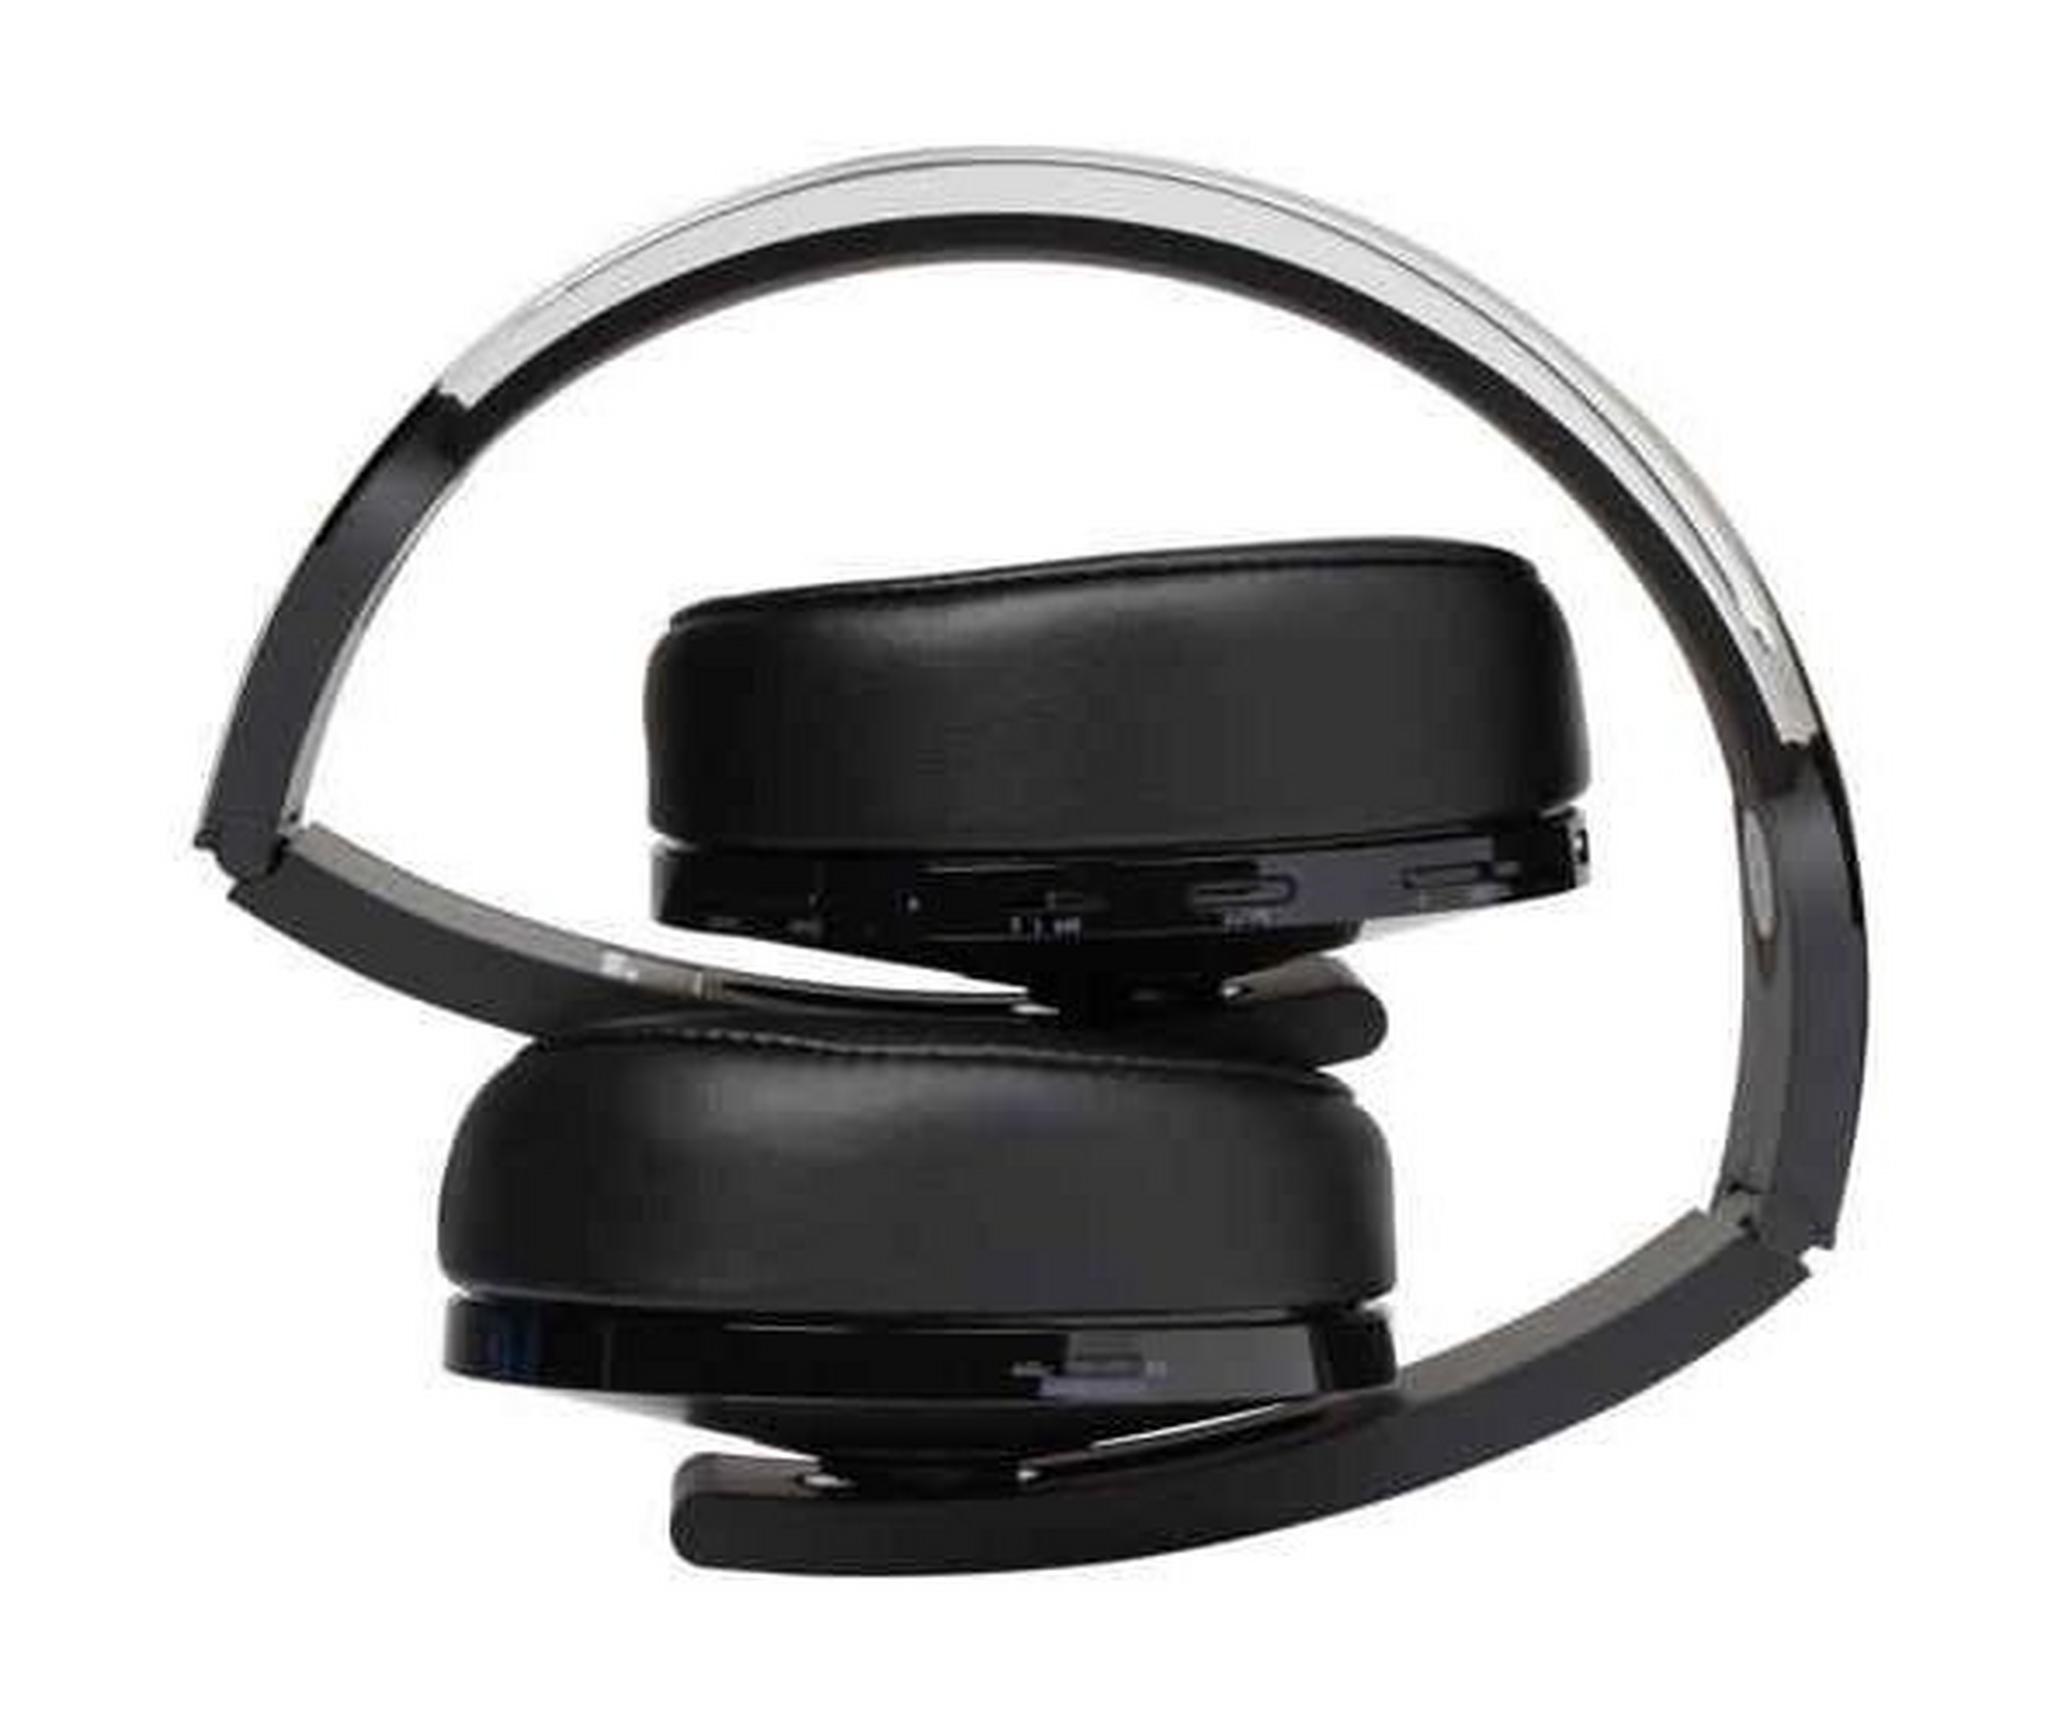 PS4 Platinum Wireless Headset (CECHYA-0090) – Black